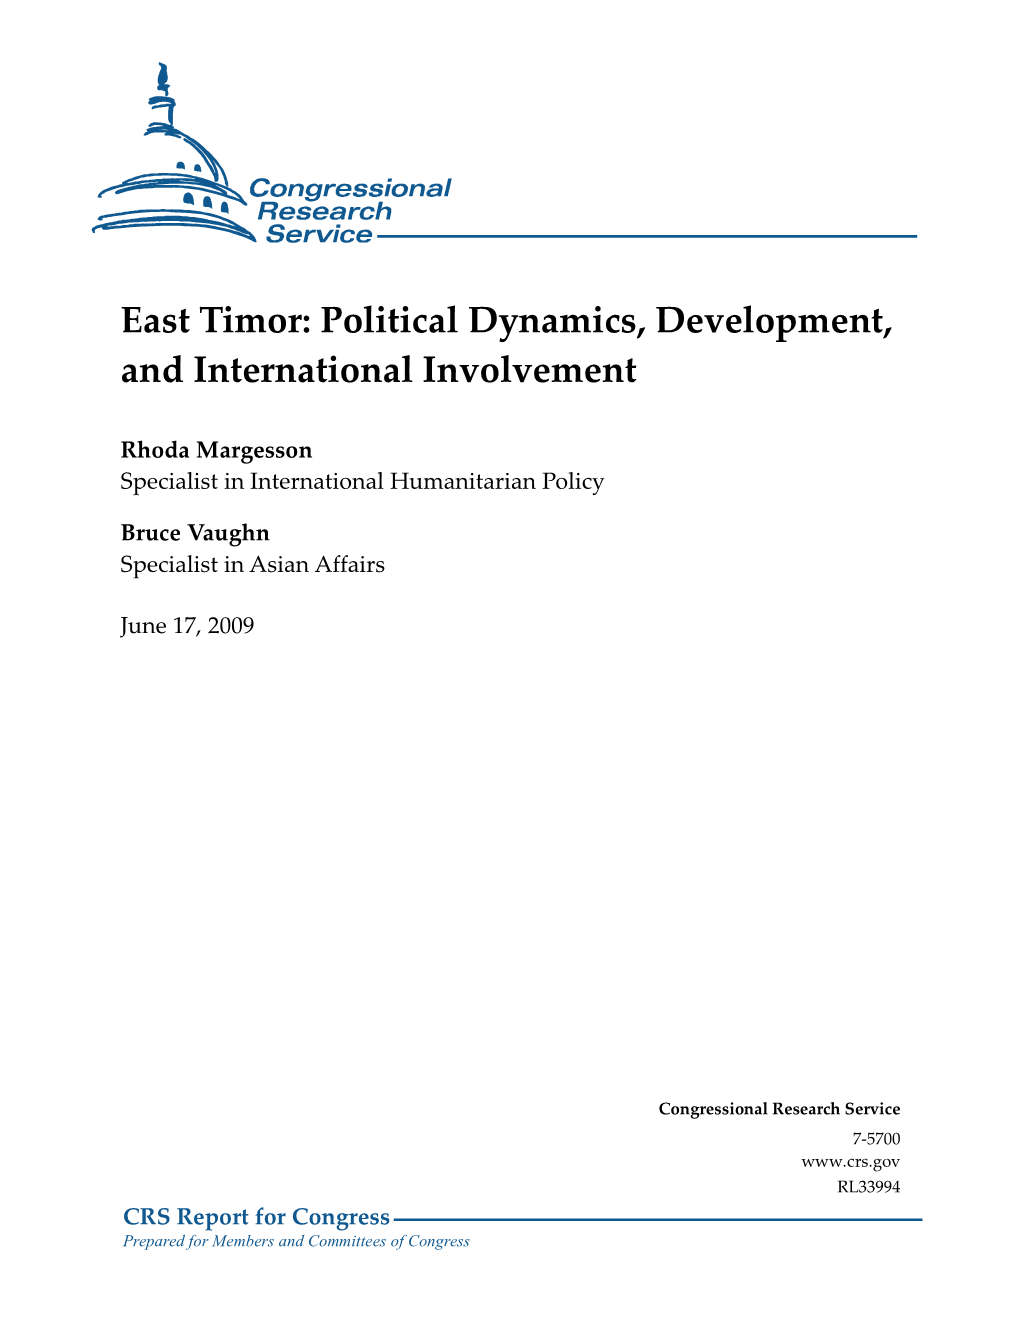 East Timor: Political Dynamics, Development, and International Involvement